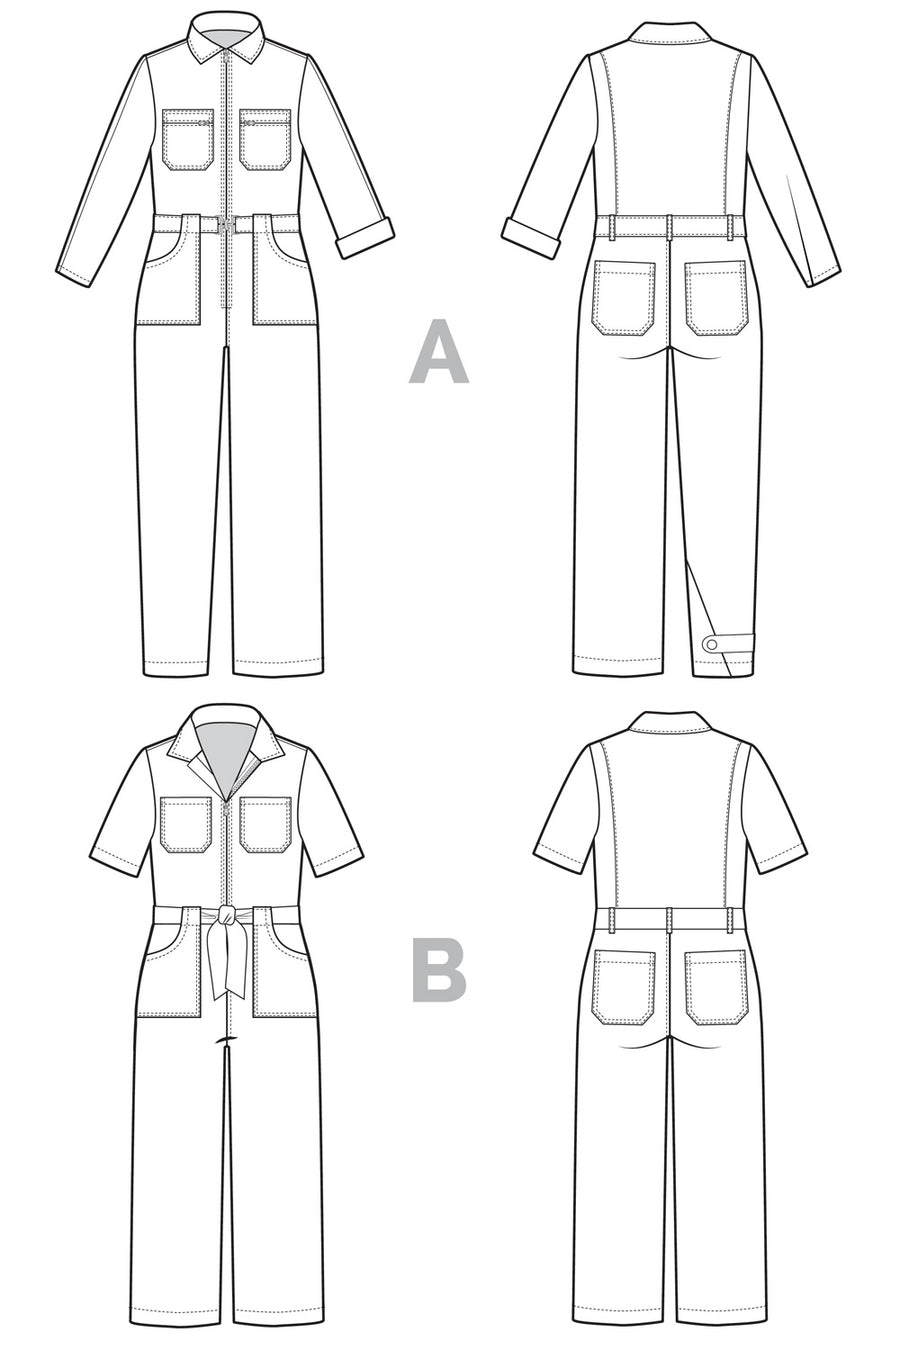 Blanca Flight Suit pattern / Boiler suit pattern from Closet Core Patterns - Technical drawings